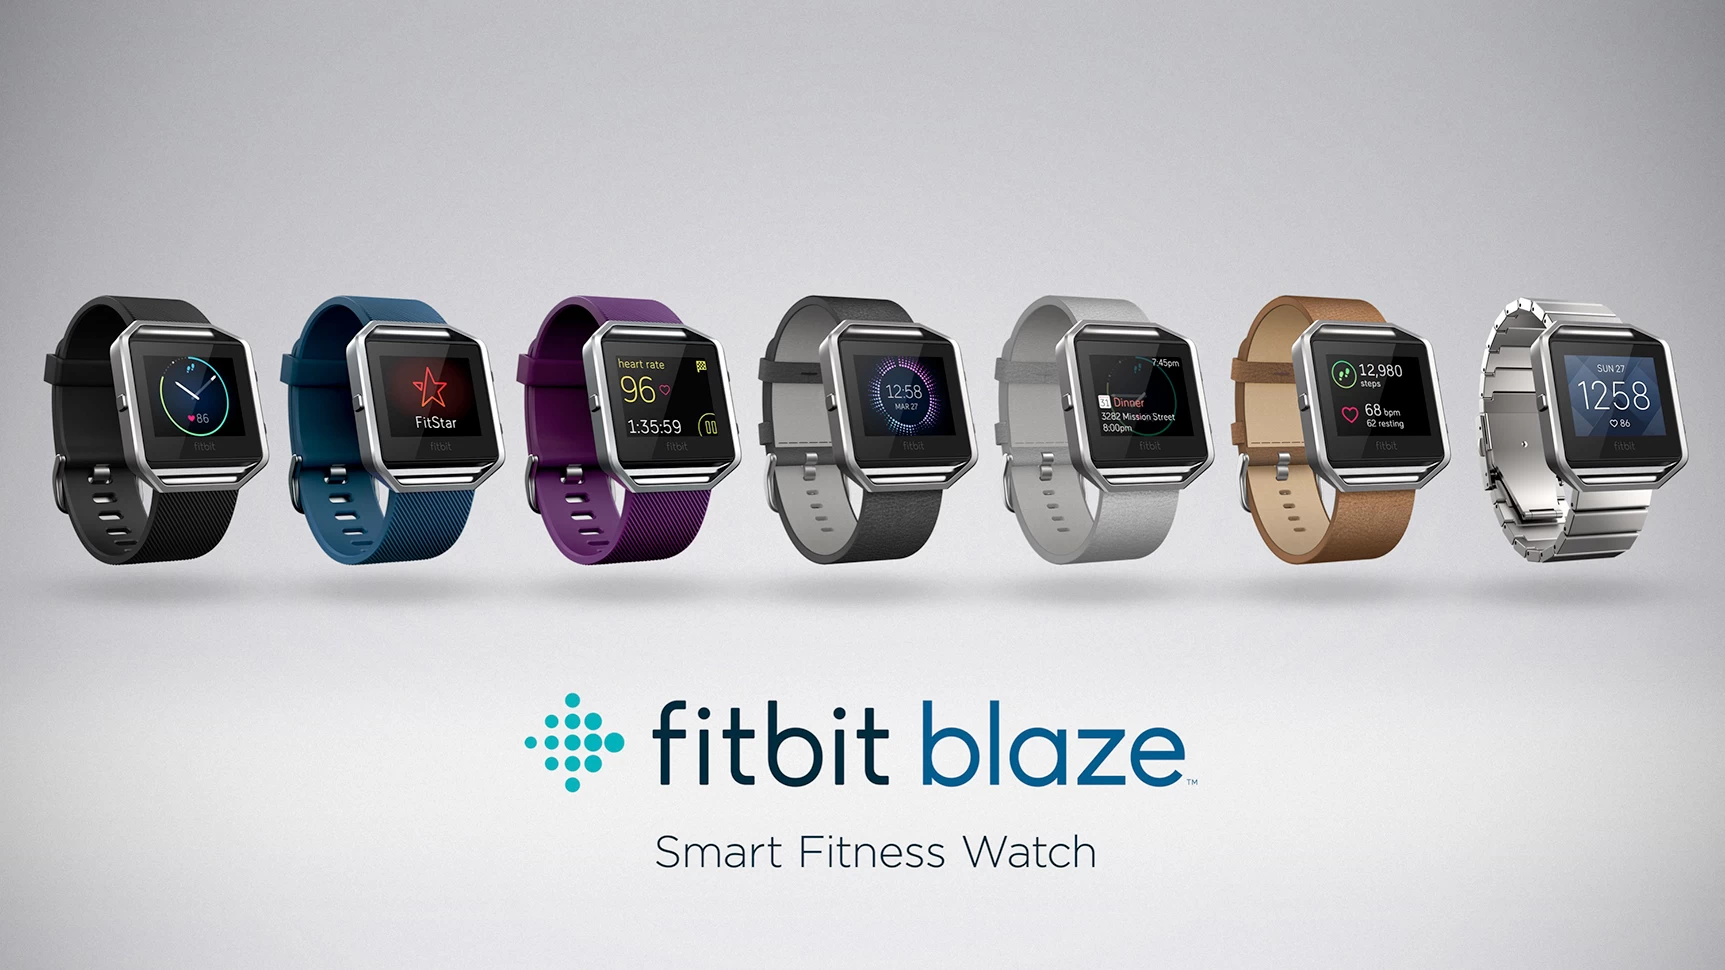 fitbit Blaze | Fitbit Blaze | [CES2016] Fitbit เปิดตัว Fitbit Blaze นาฬิกาอัจฉริยะที่เน้นเด่นเรื่องการออกกำลังกายจากค่ายดังระดับโลก